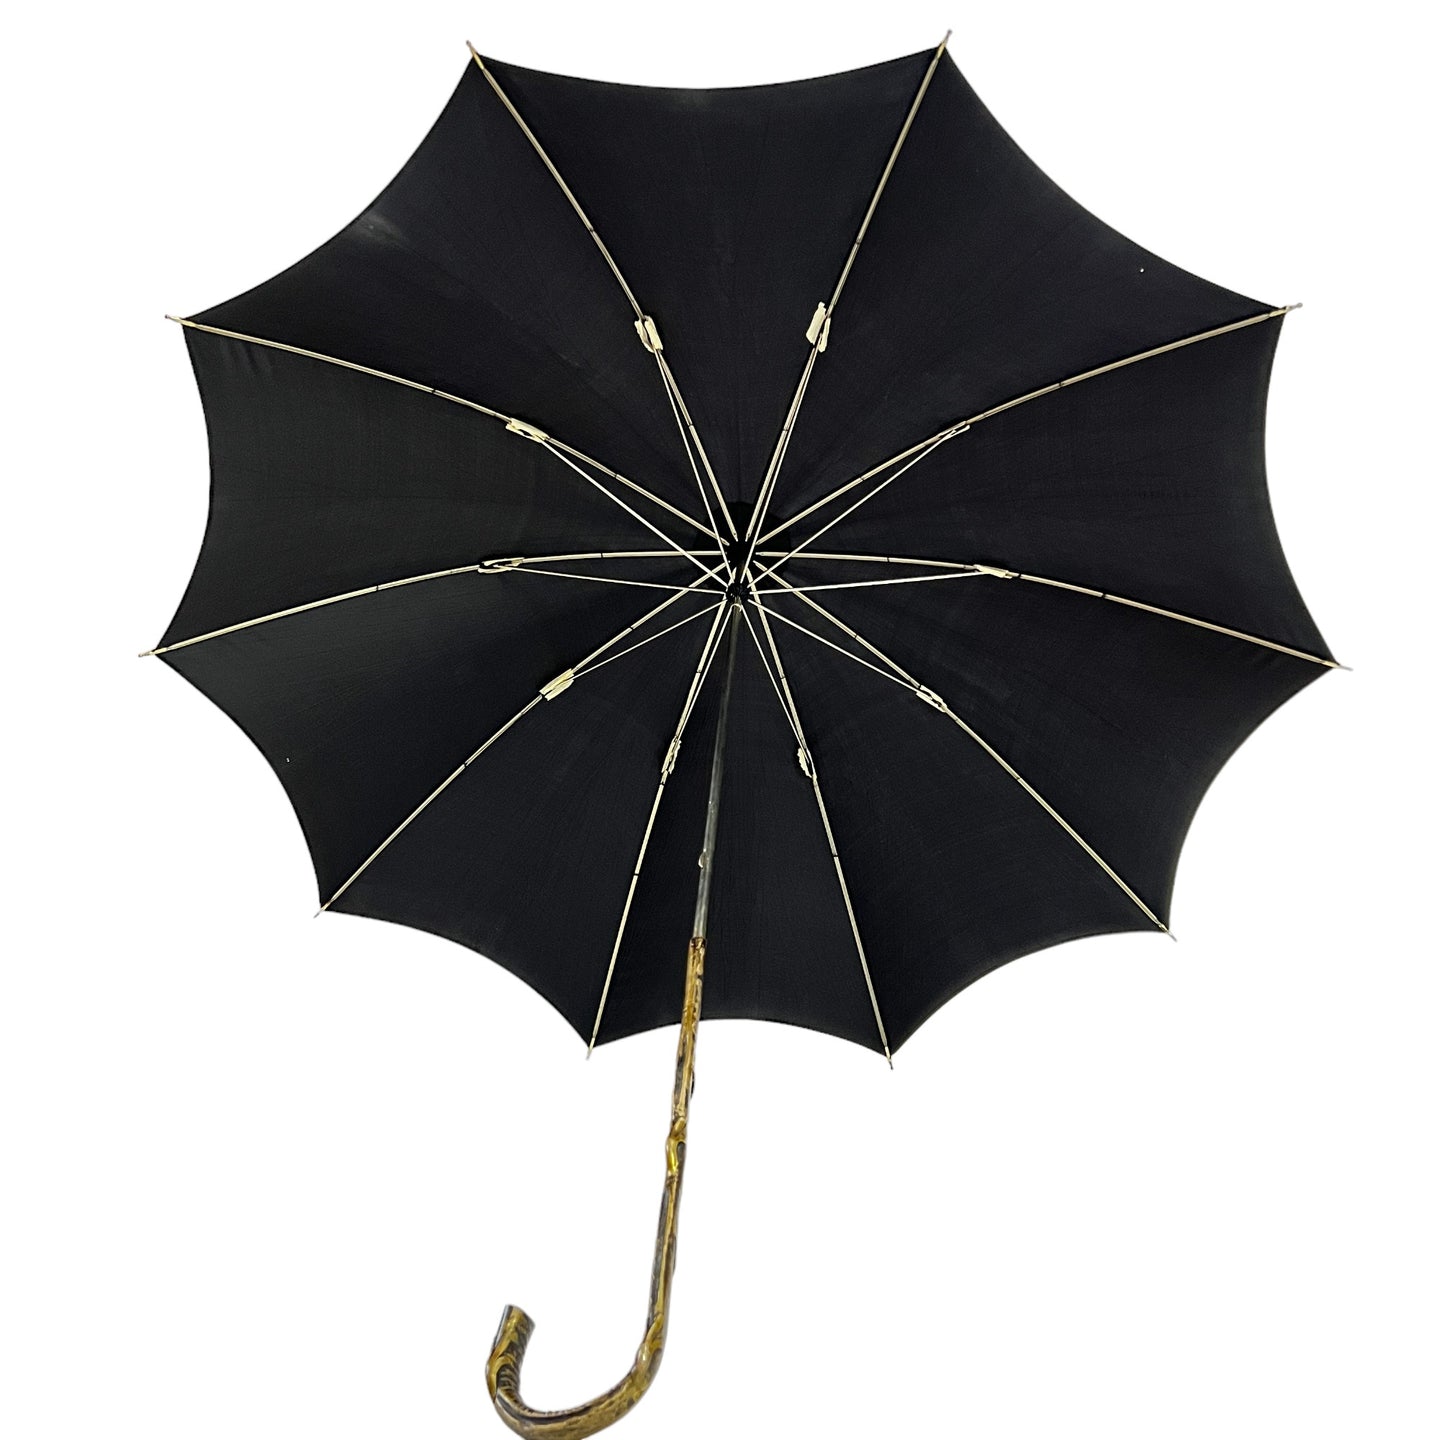 Antique Parasol Umbrella Black